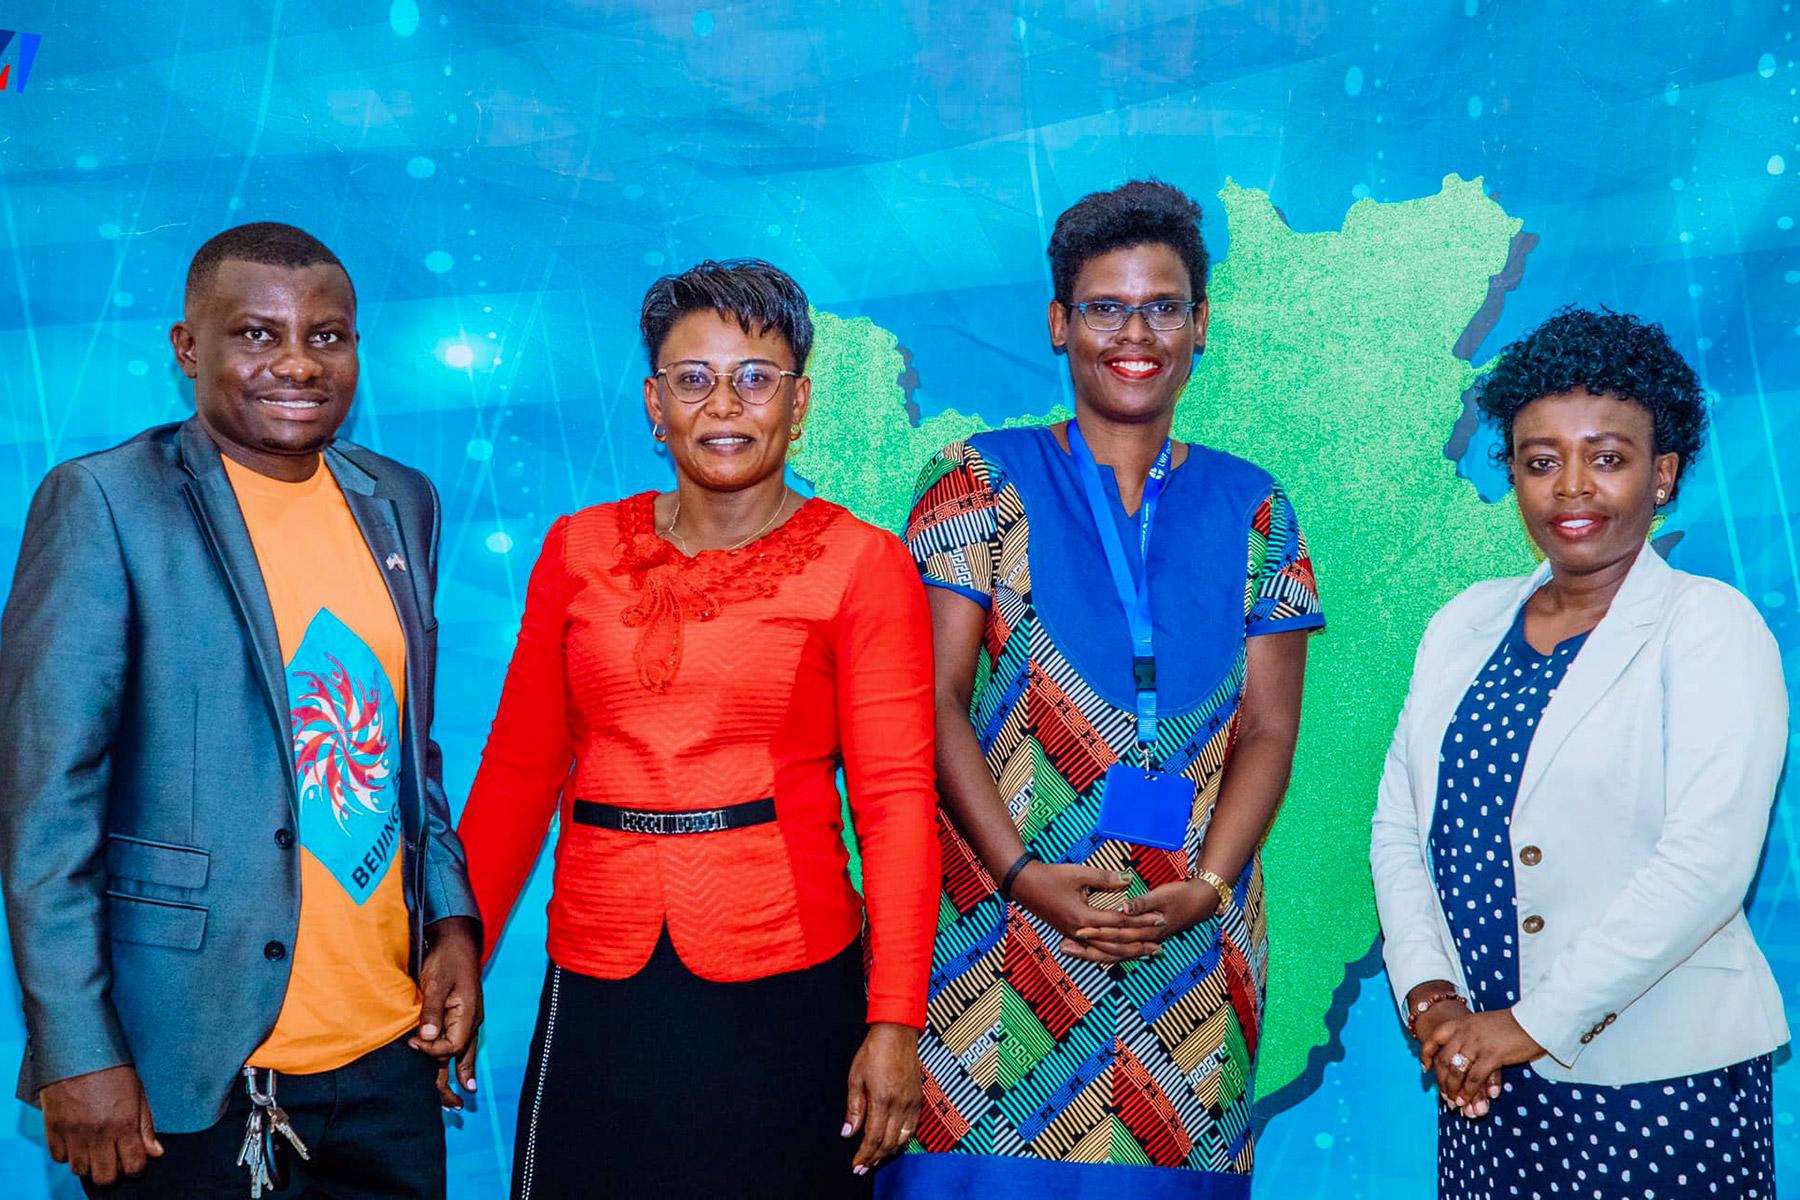 LWF Burundi Country representative Martine Nibasumba (2 from left) with the panel on national TV. Photo: LWF